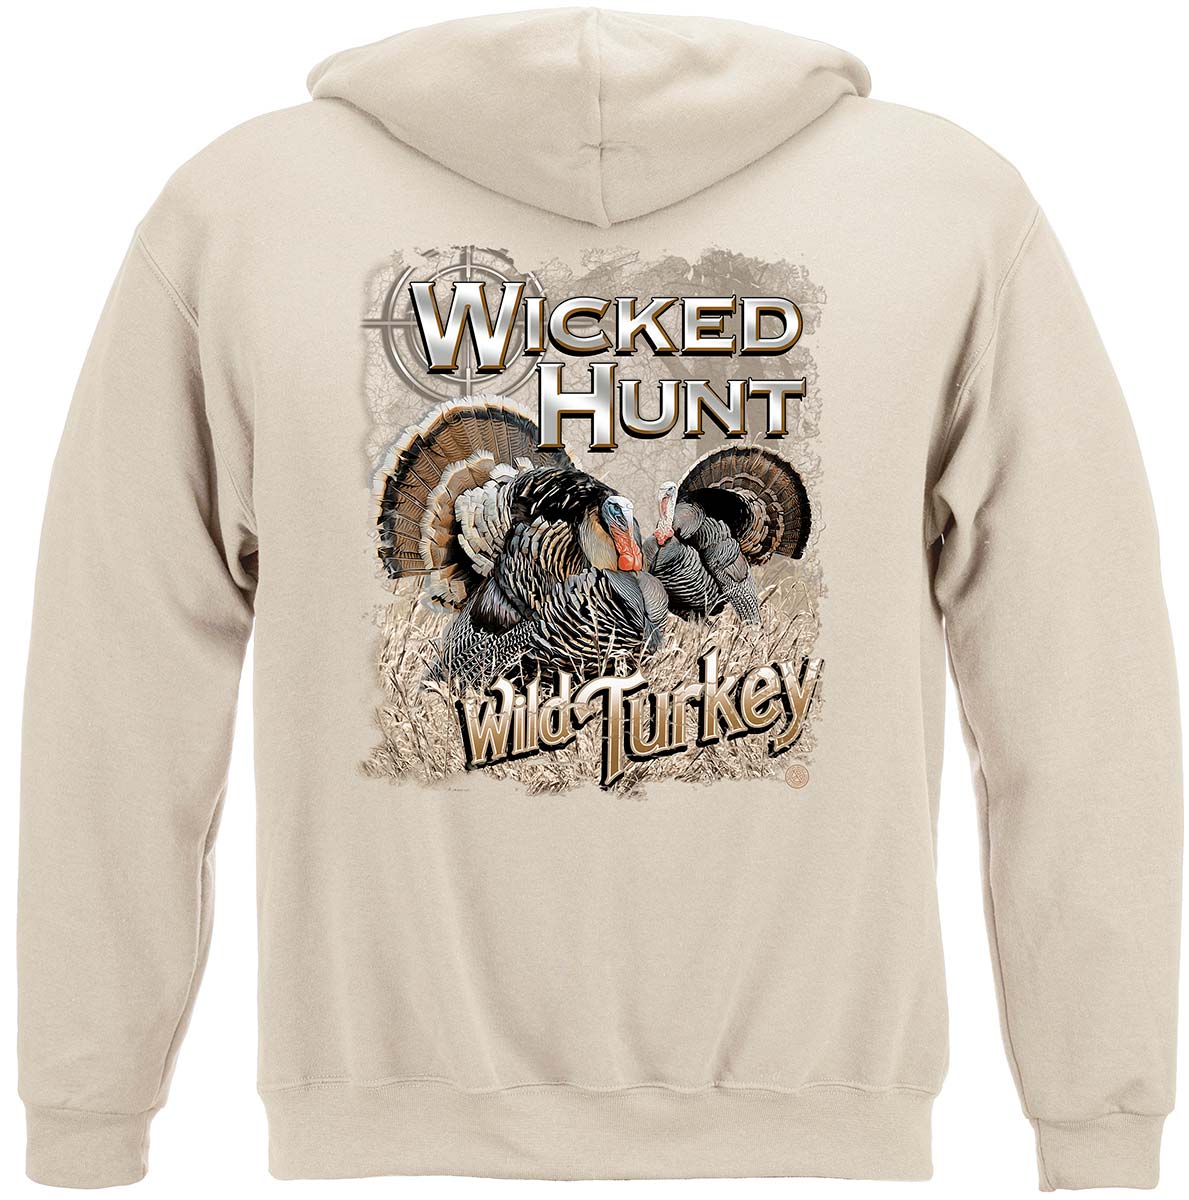 Wicked Hunt WILD Turkey Hoodie - ICED GRAY